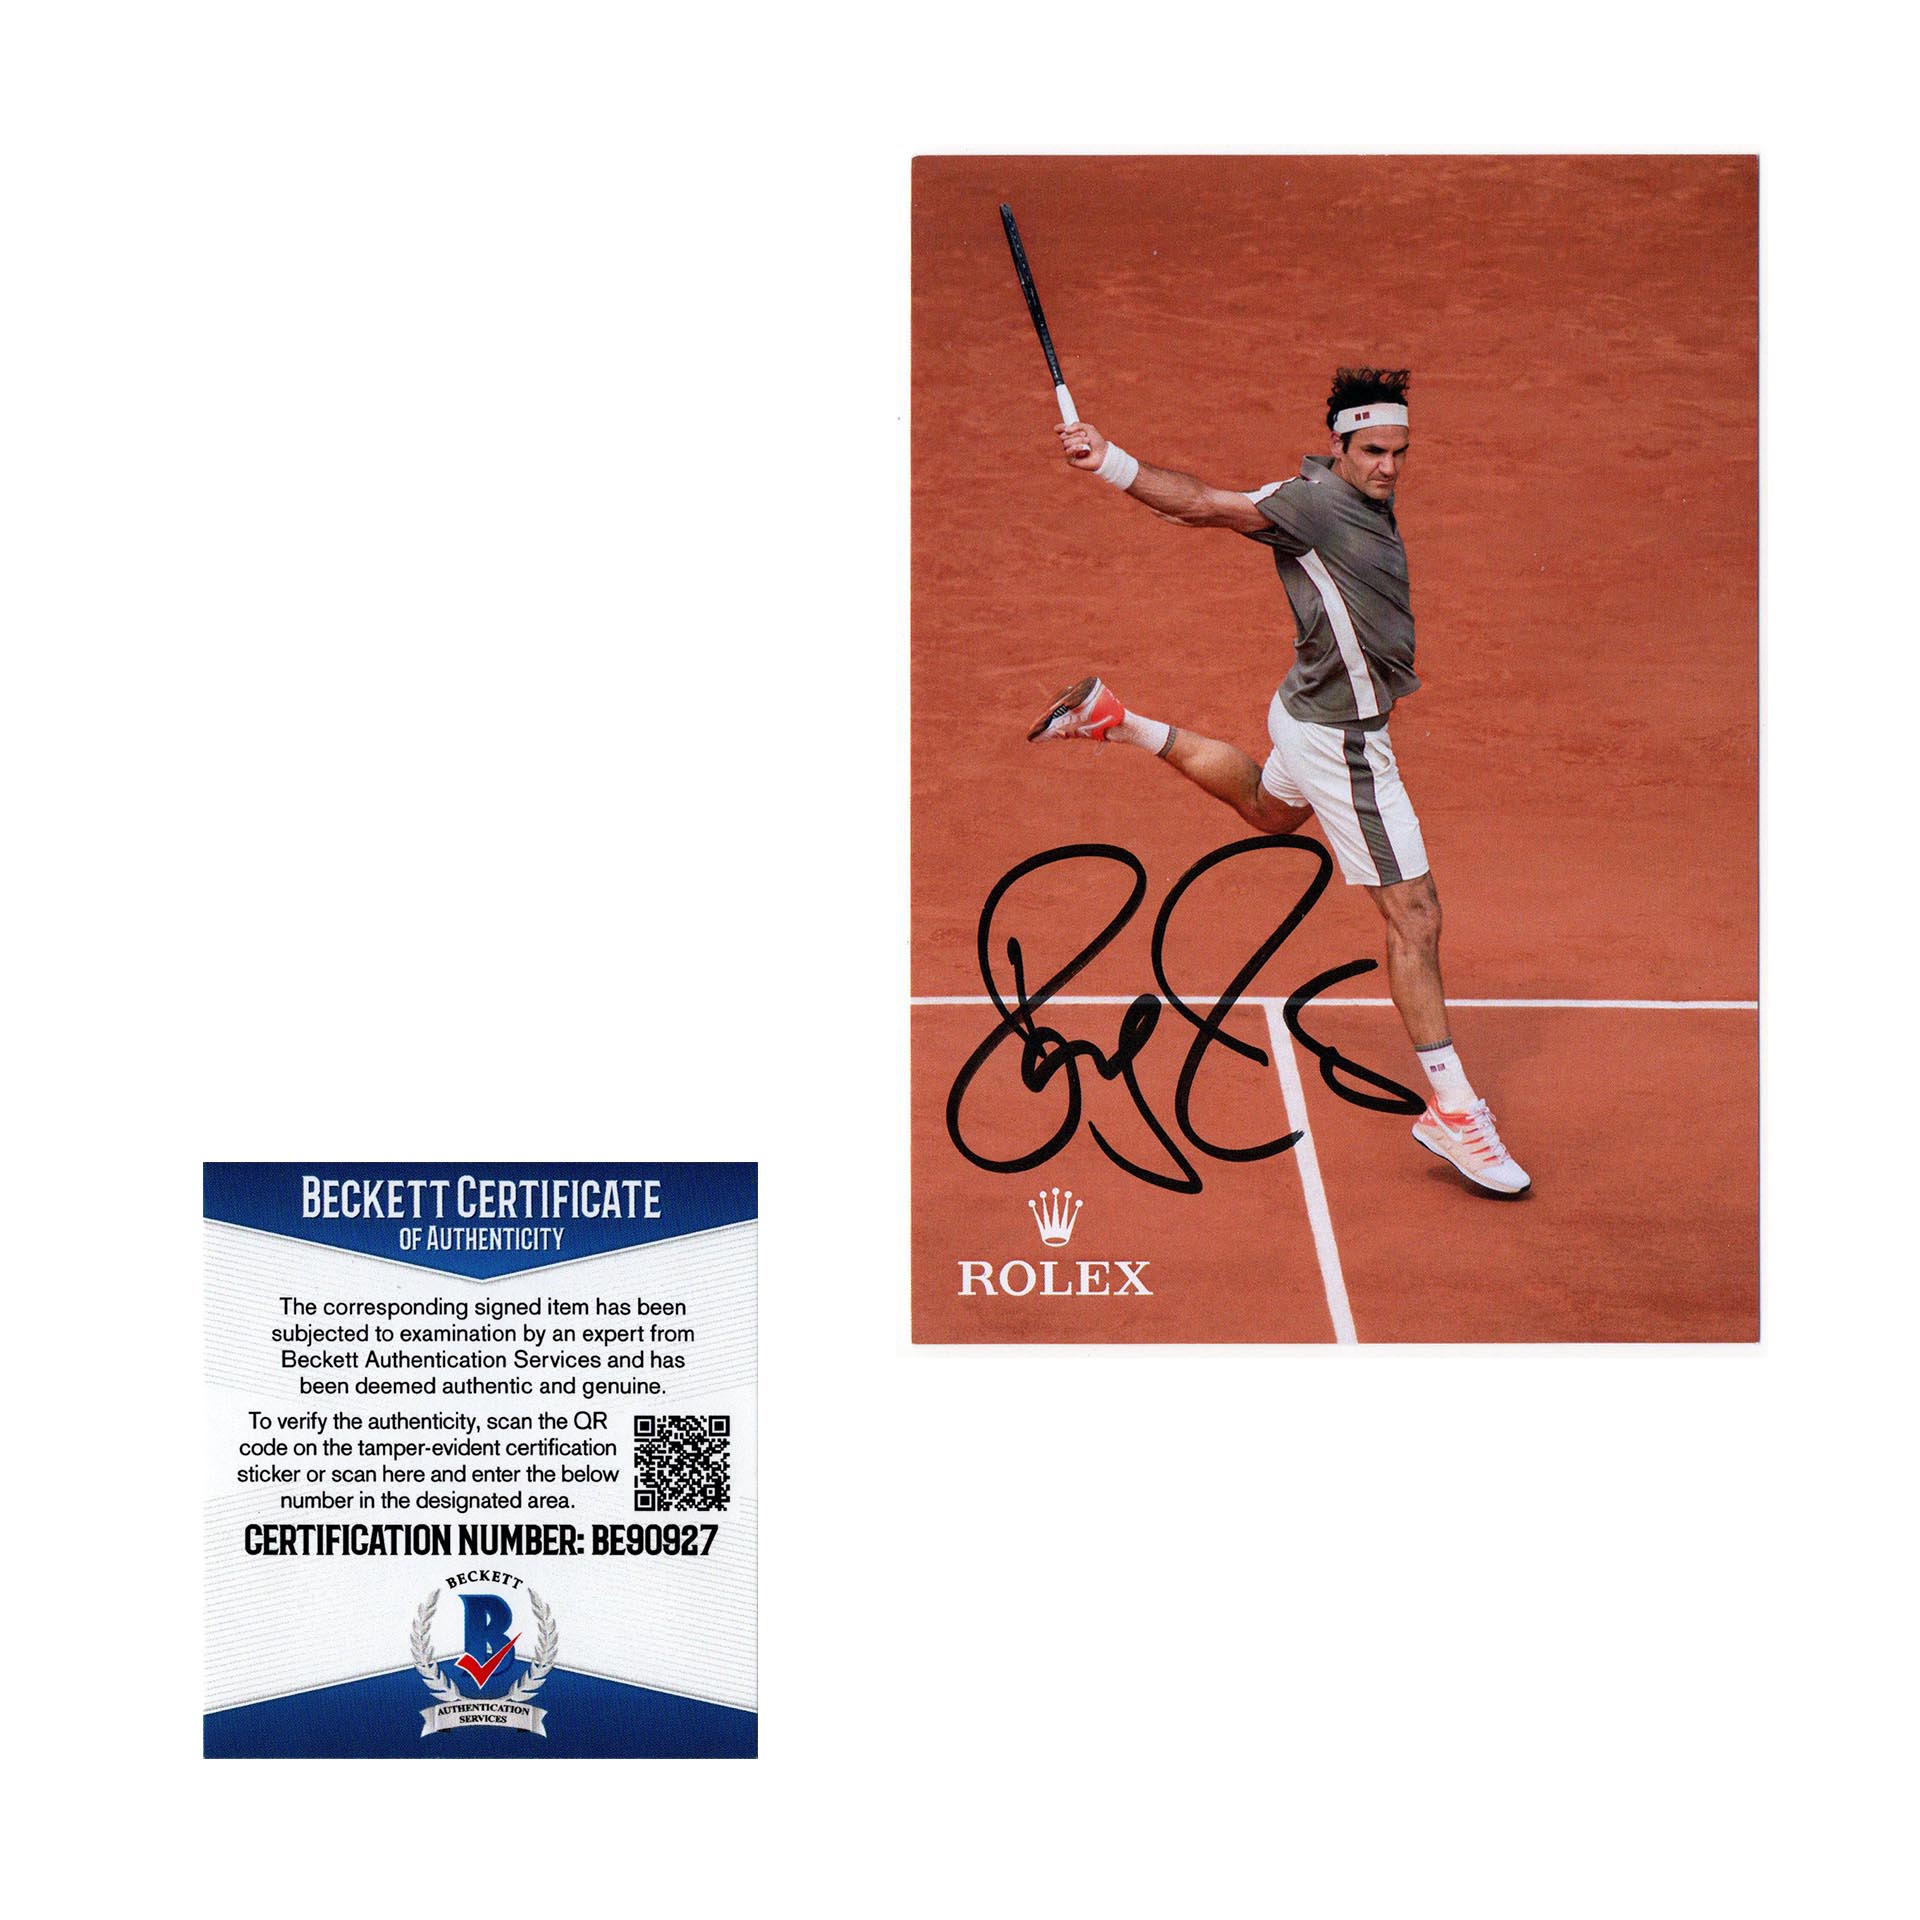 ATP: 500! - John Isner with phenomenal tiebreak record ·